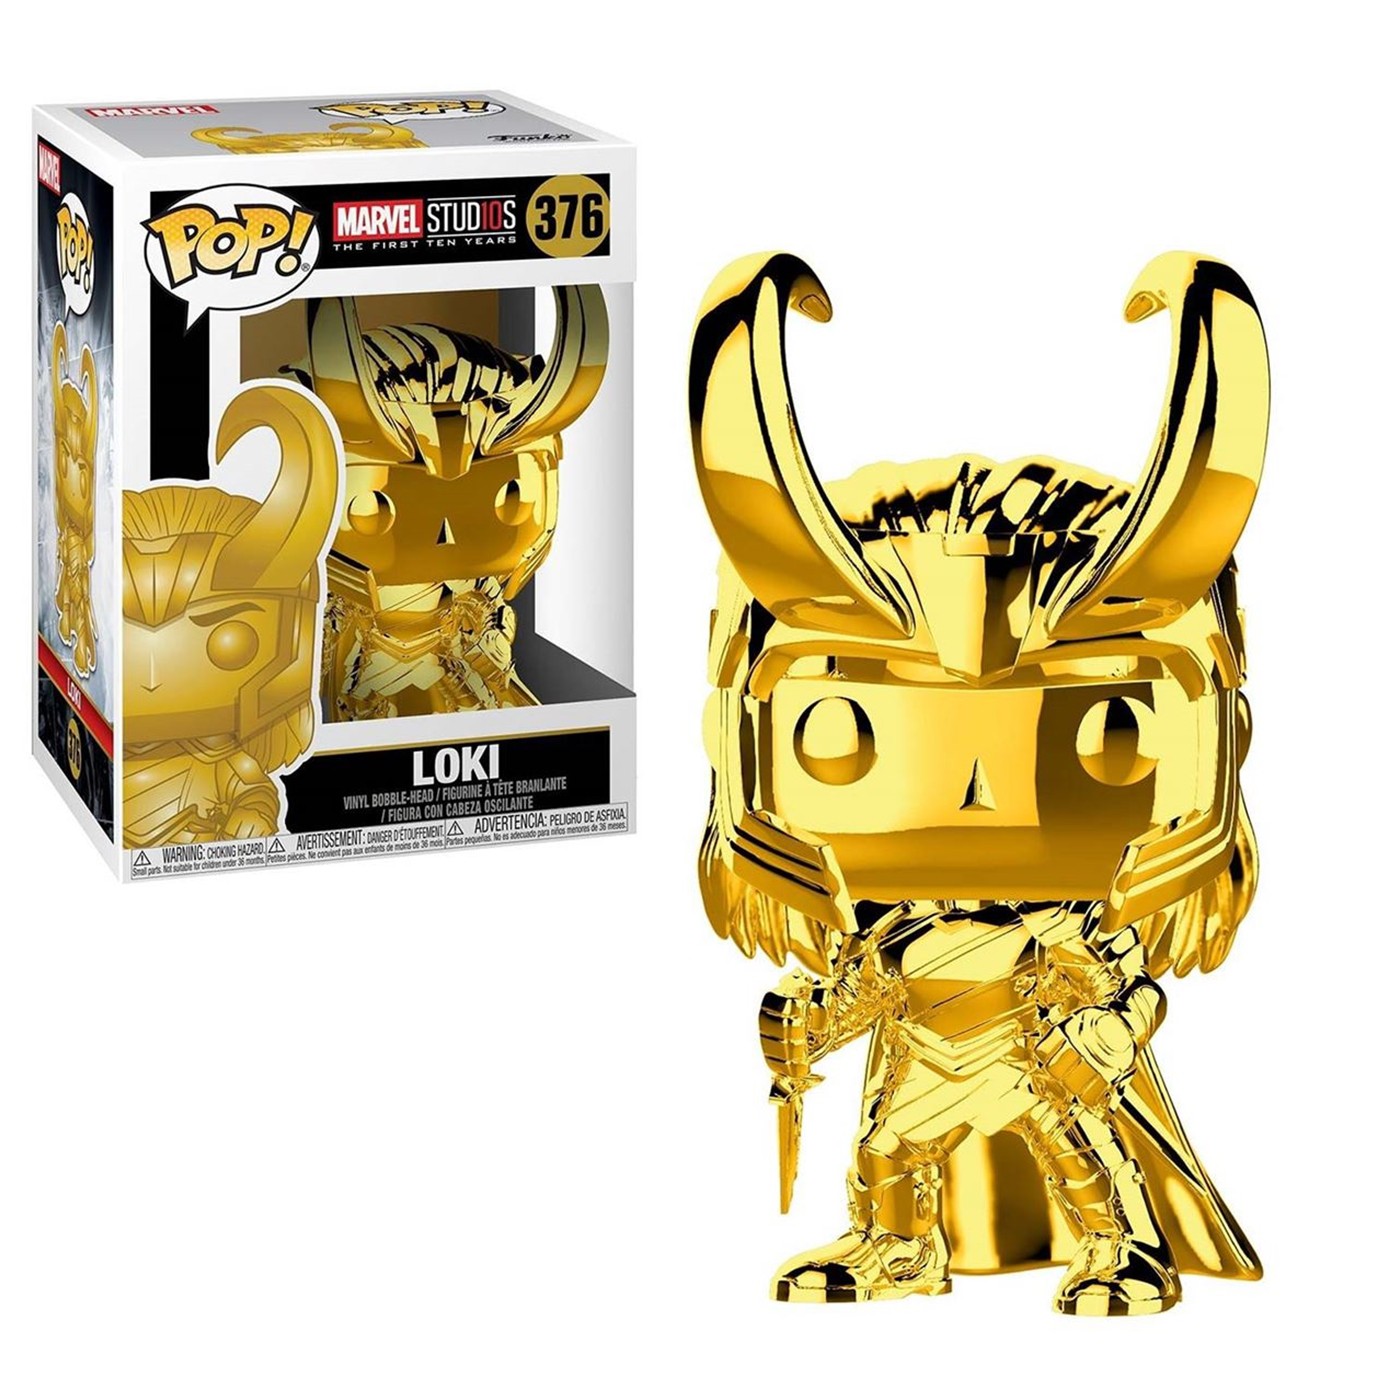 Marvel Studios 10th Anniv Loki Gold Chrome Funko Pop Bobble Head